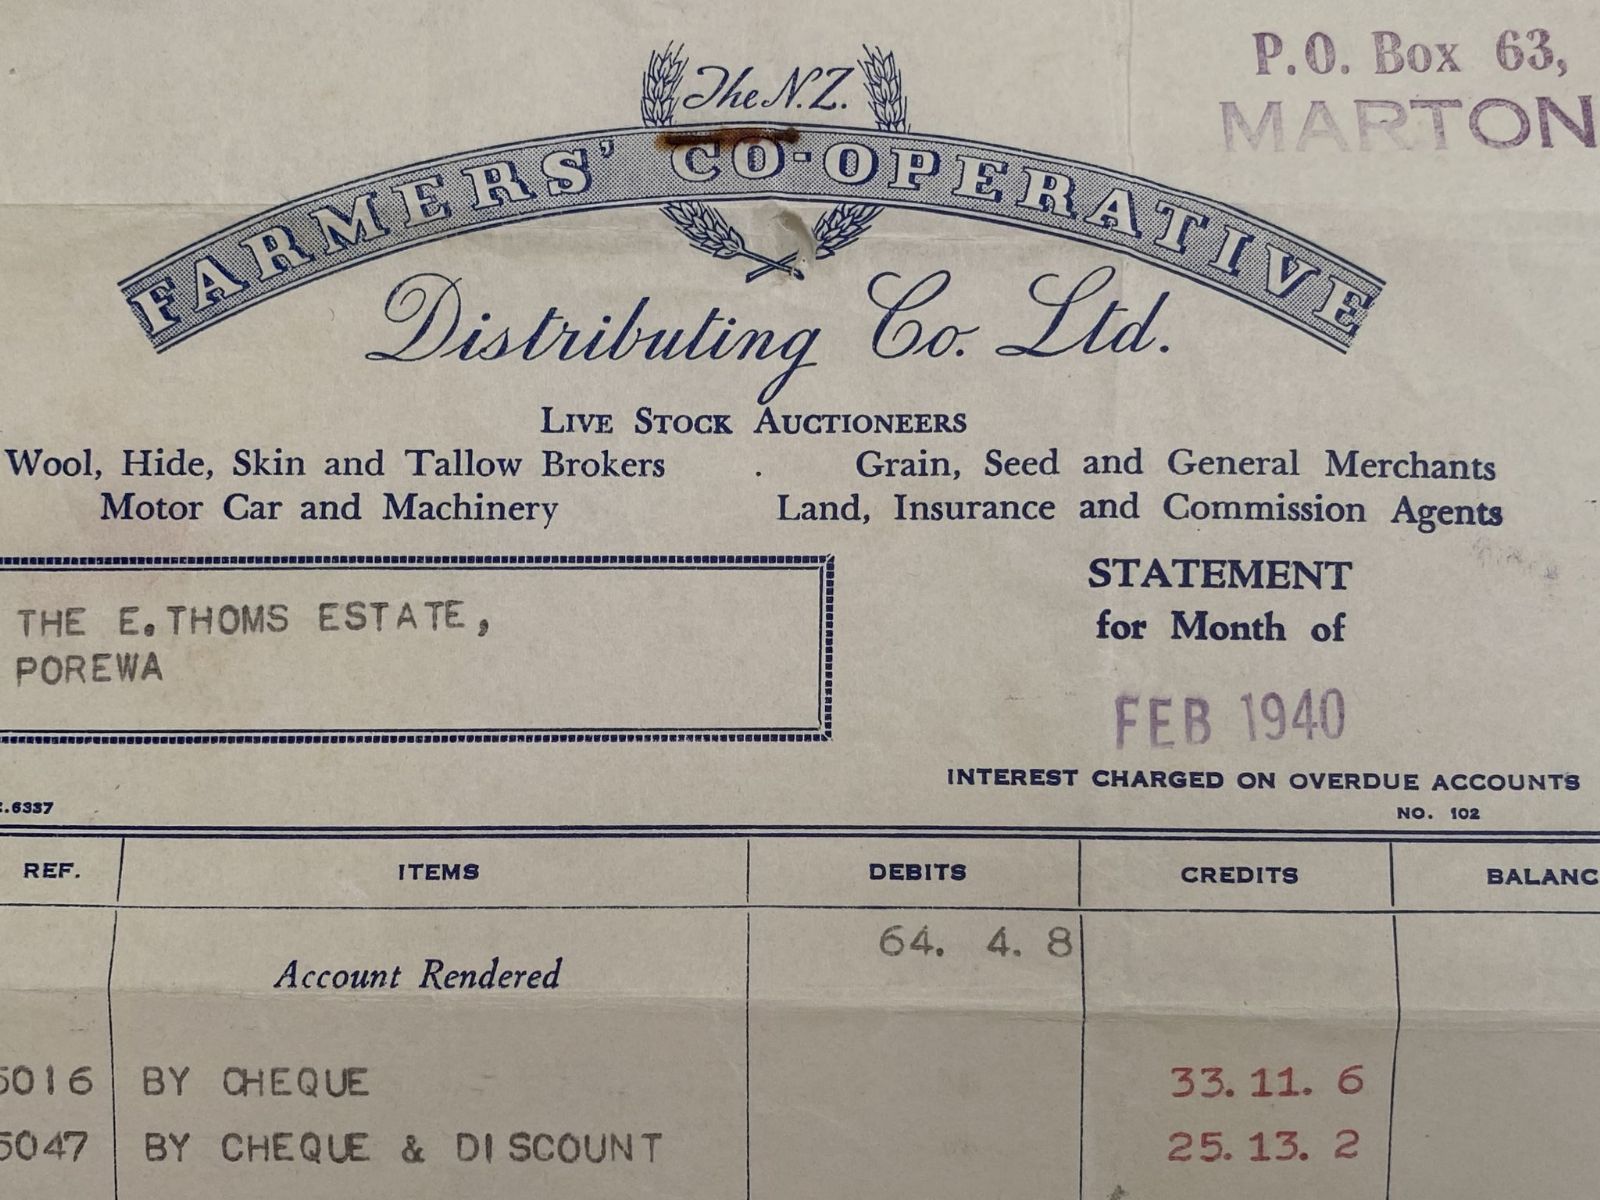 OLD INVOICE / RECEIPT: Farmers Co-operative Distributing Co. Ltd. 1940